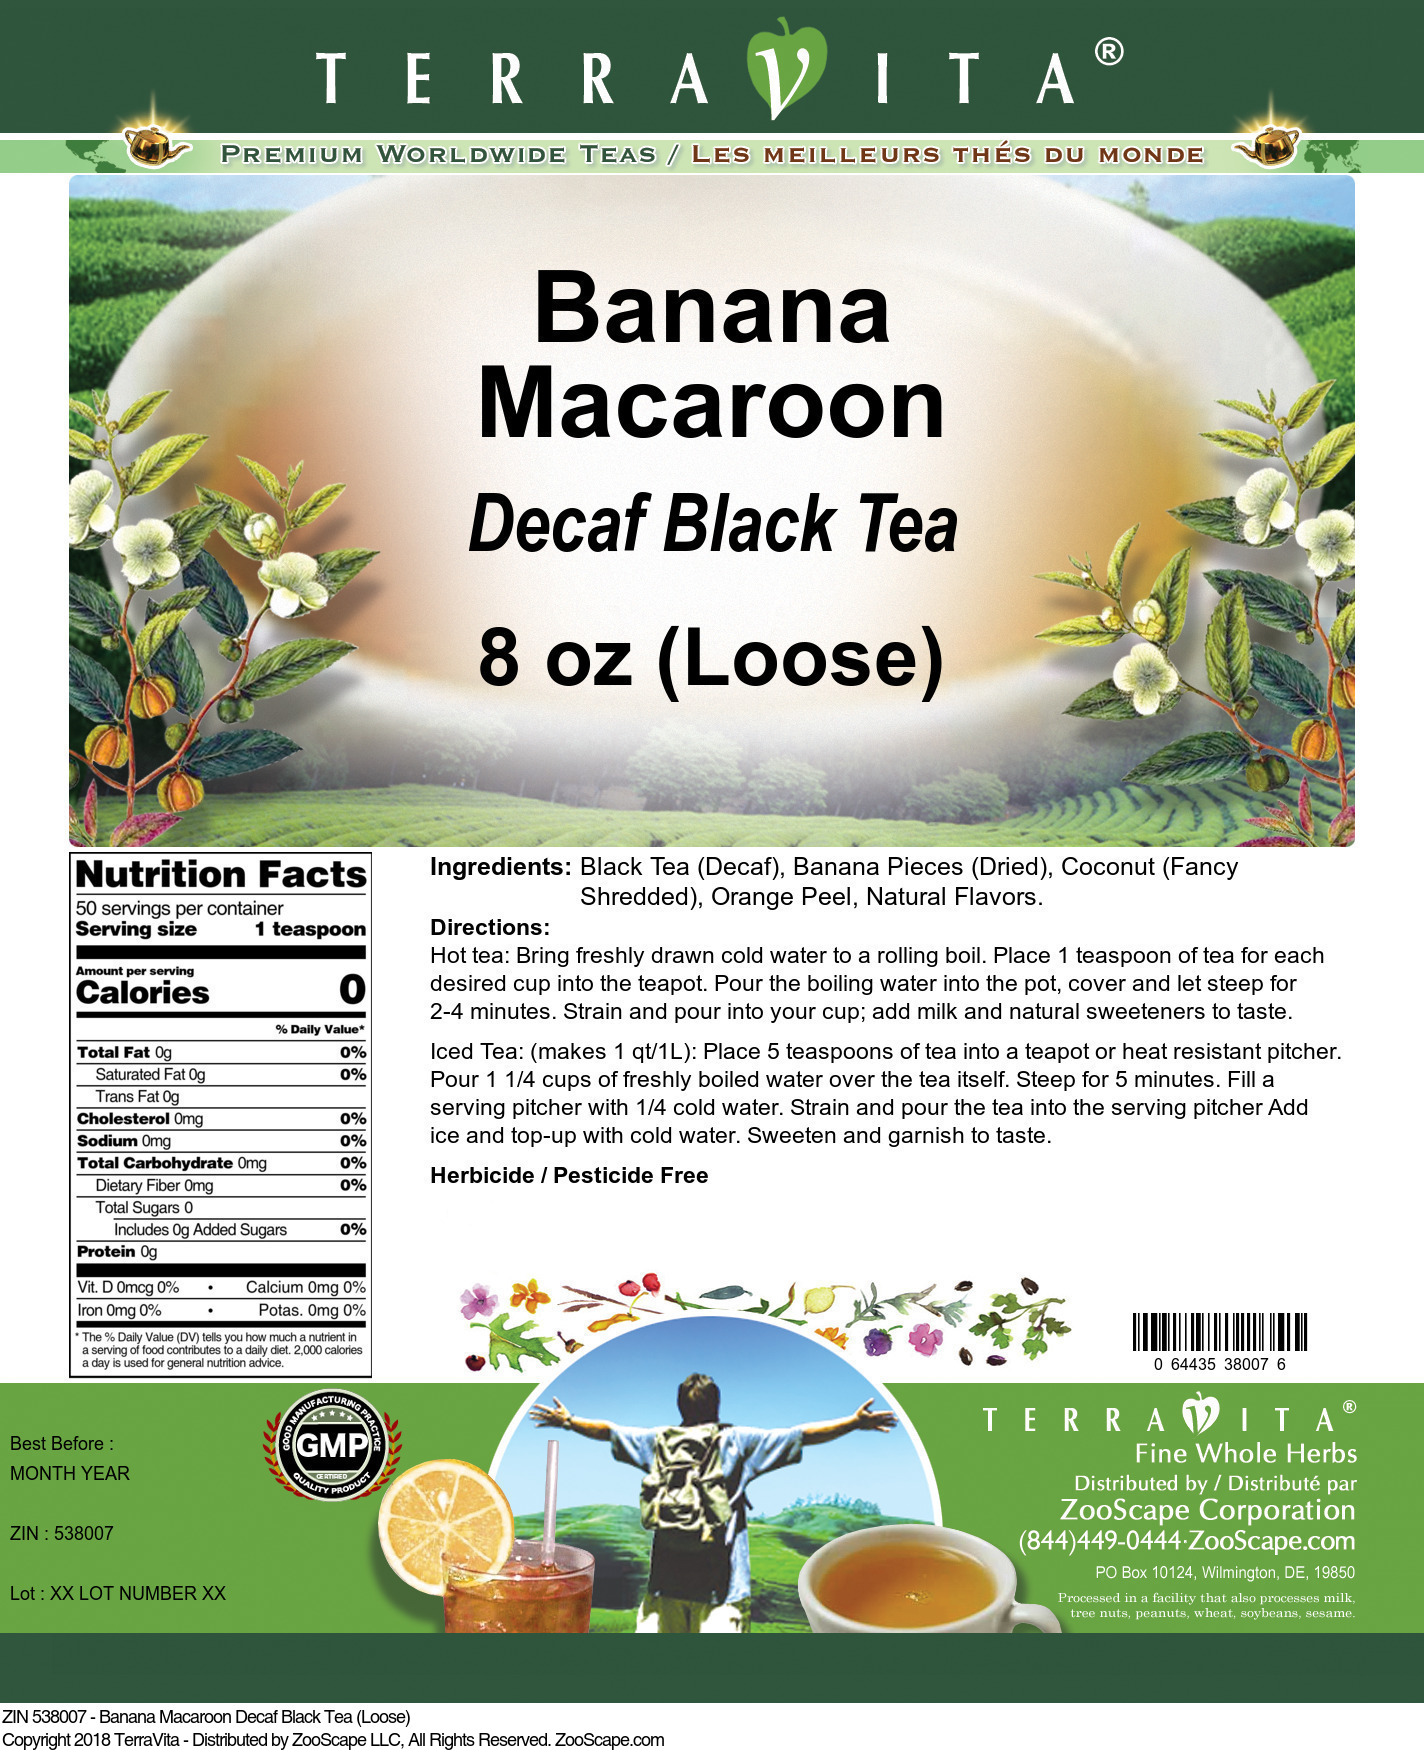 Banana Macaroon Decaf Black Tea (Loose) - Label